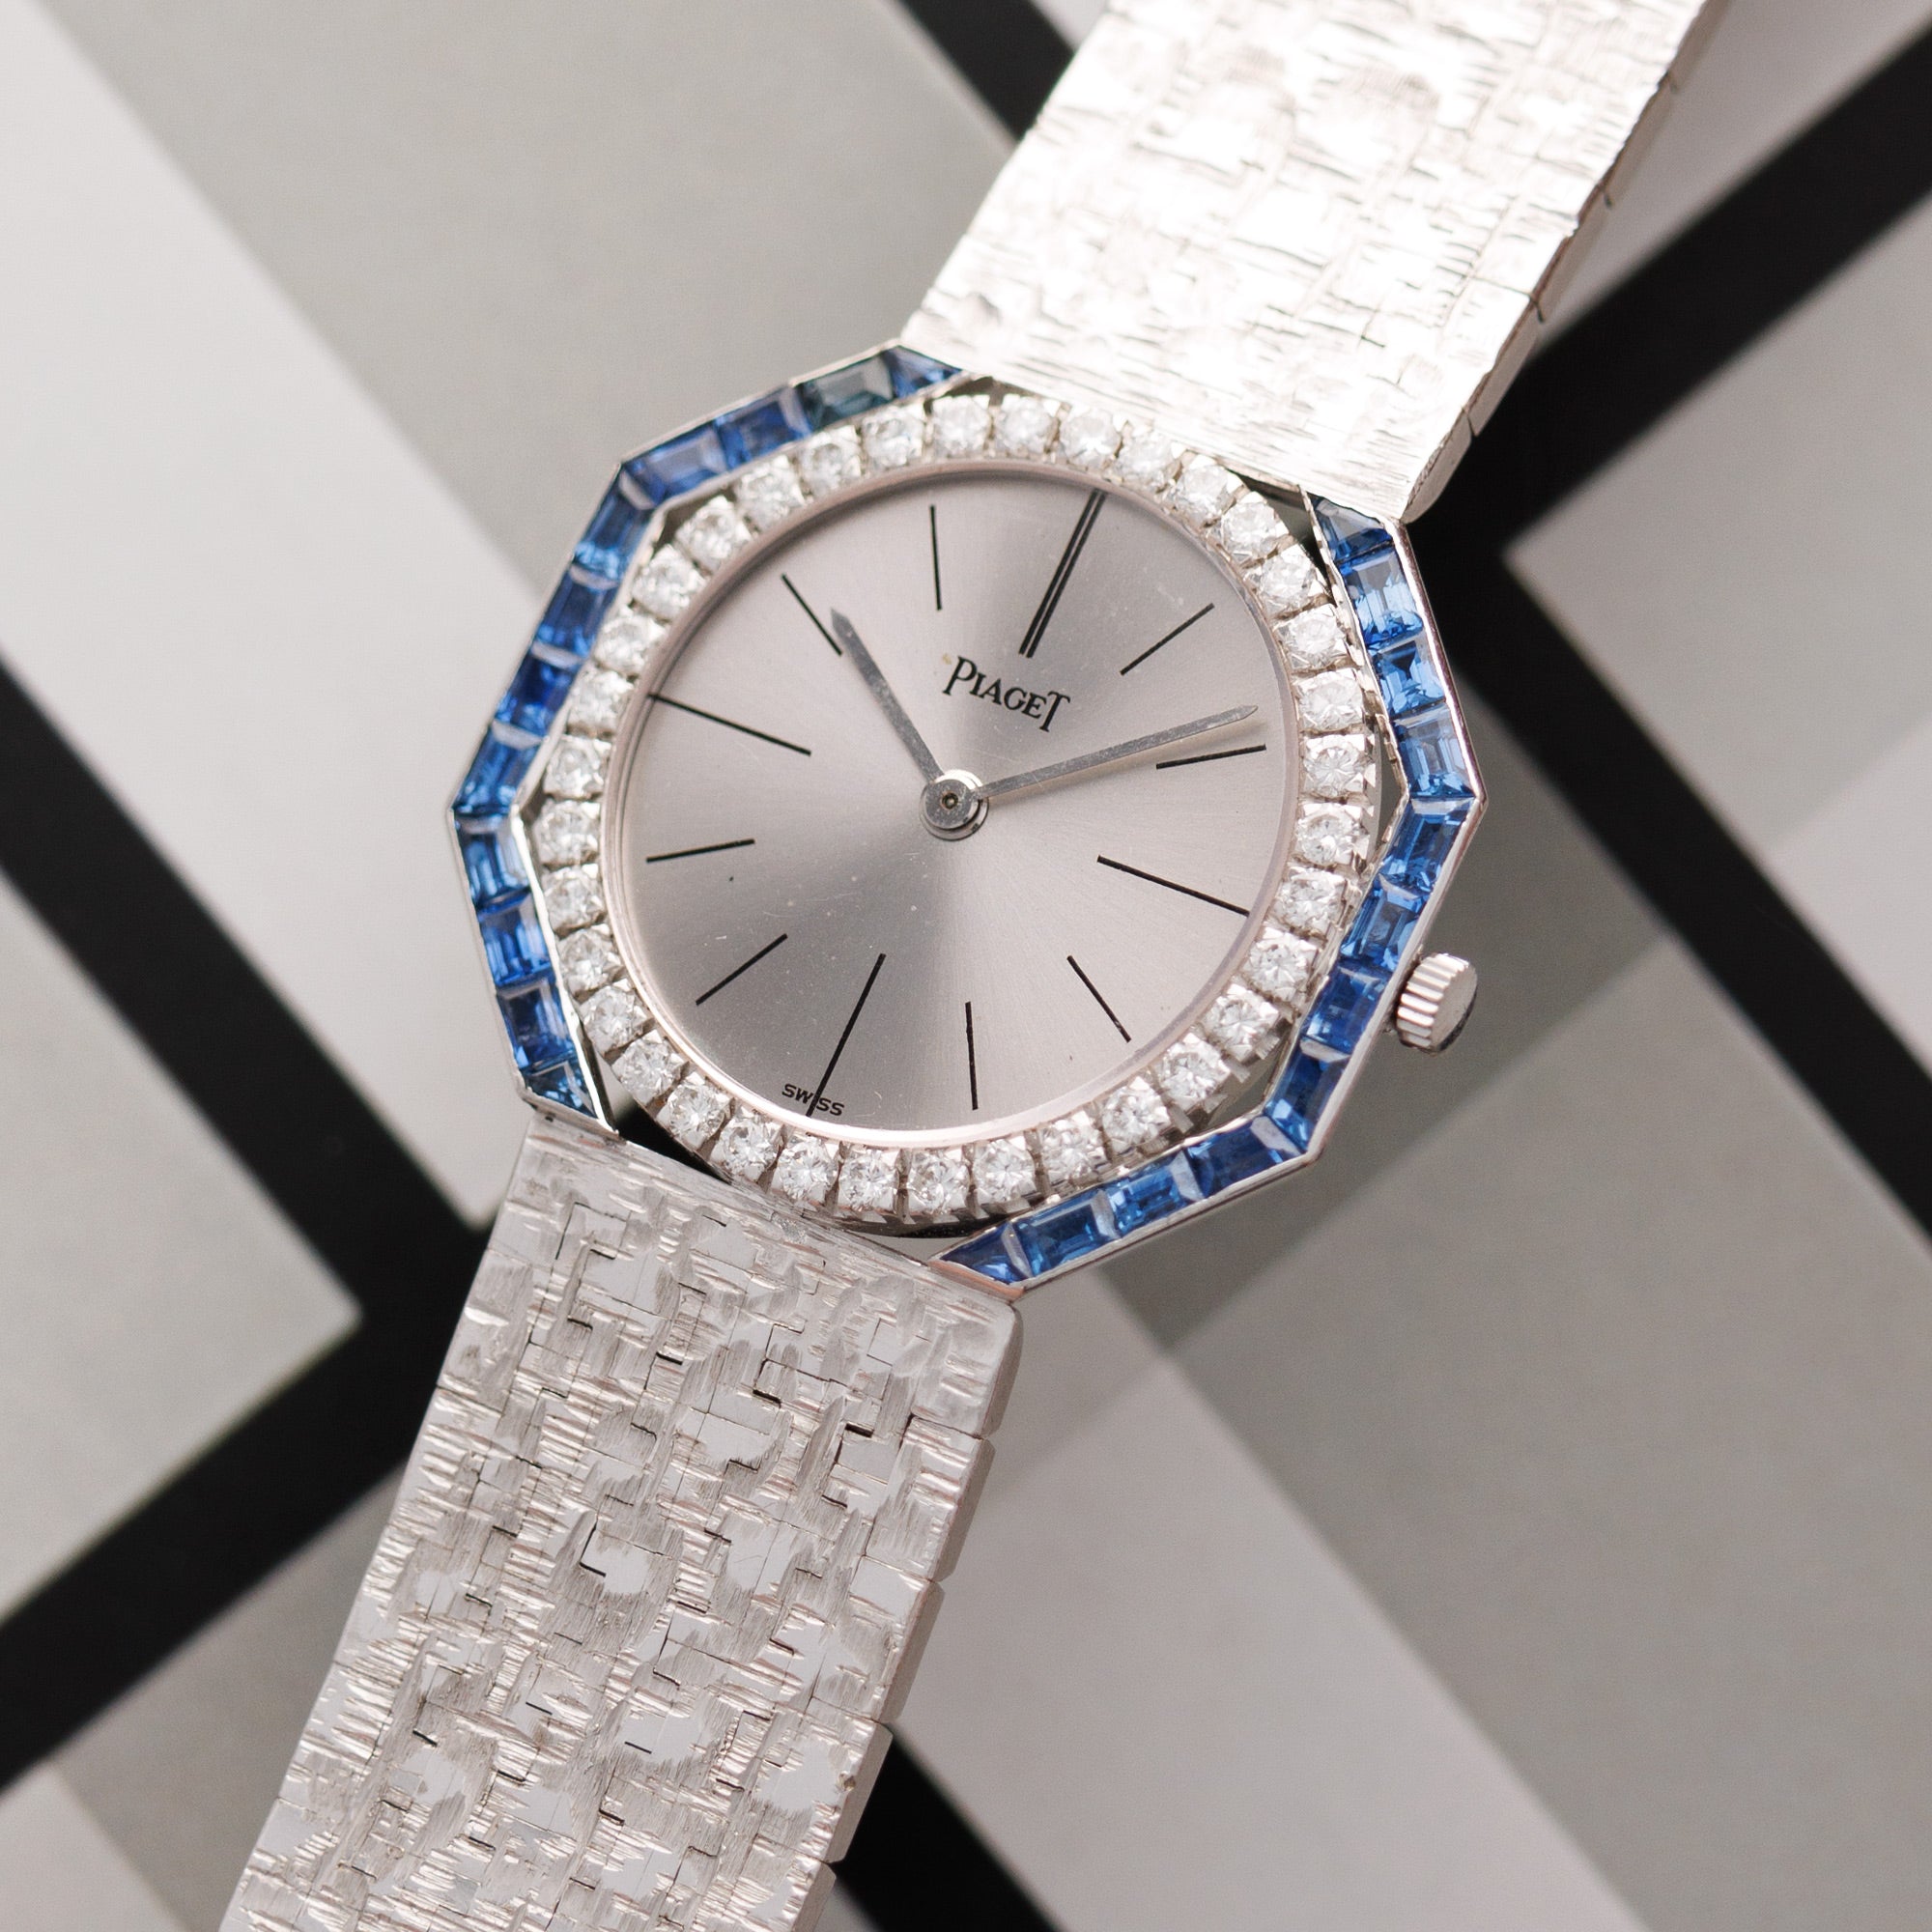 Piaget - Piaget White Gold Diamond and Sapphire Bezel - The Keystone Watches